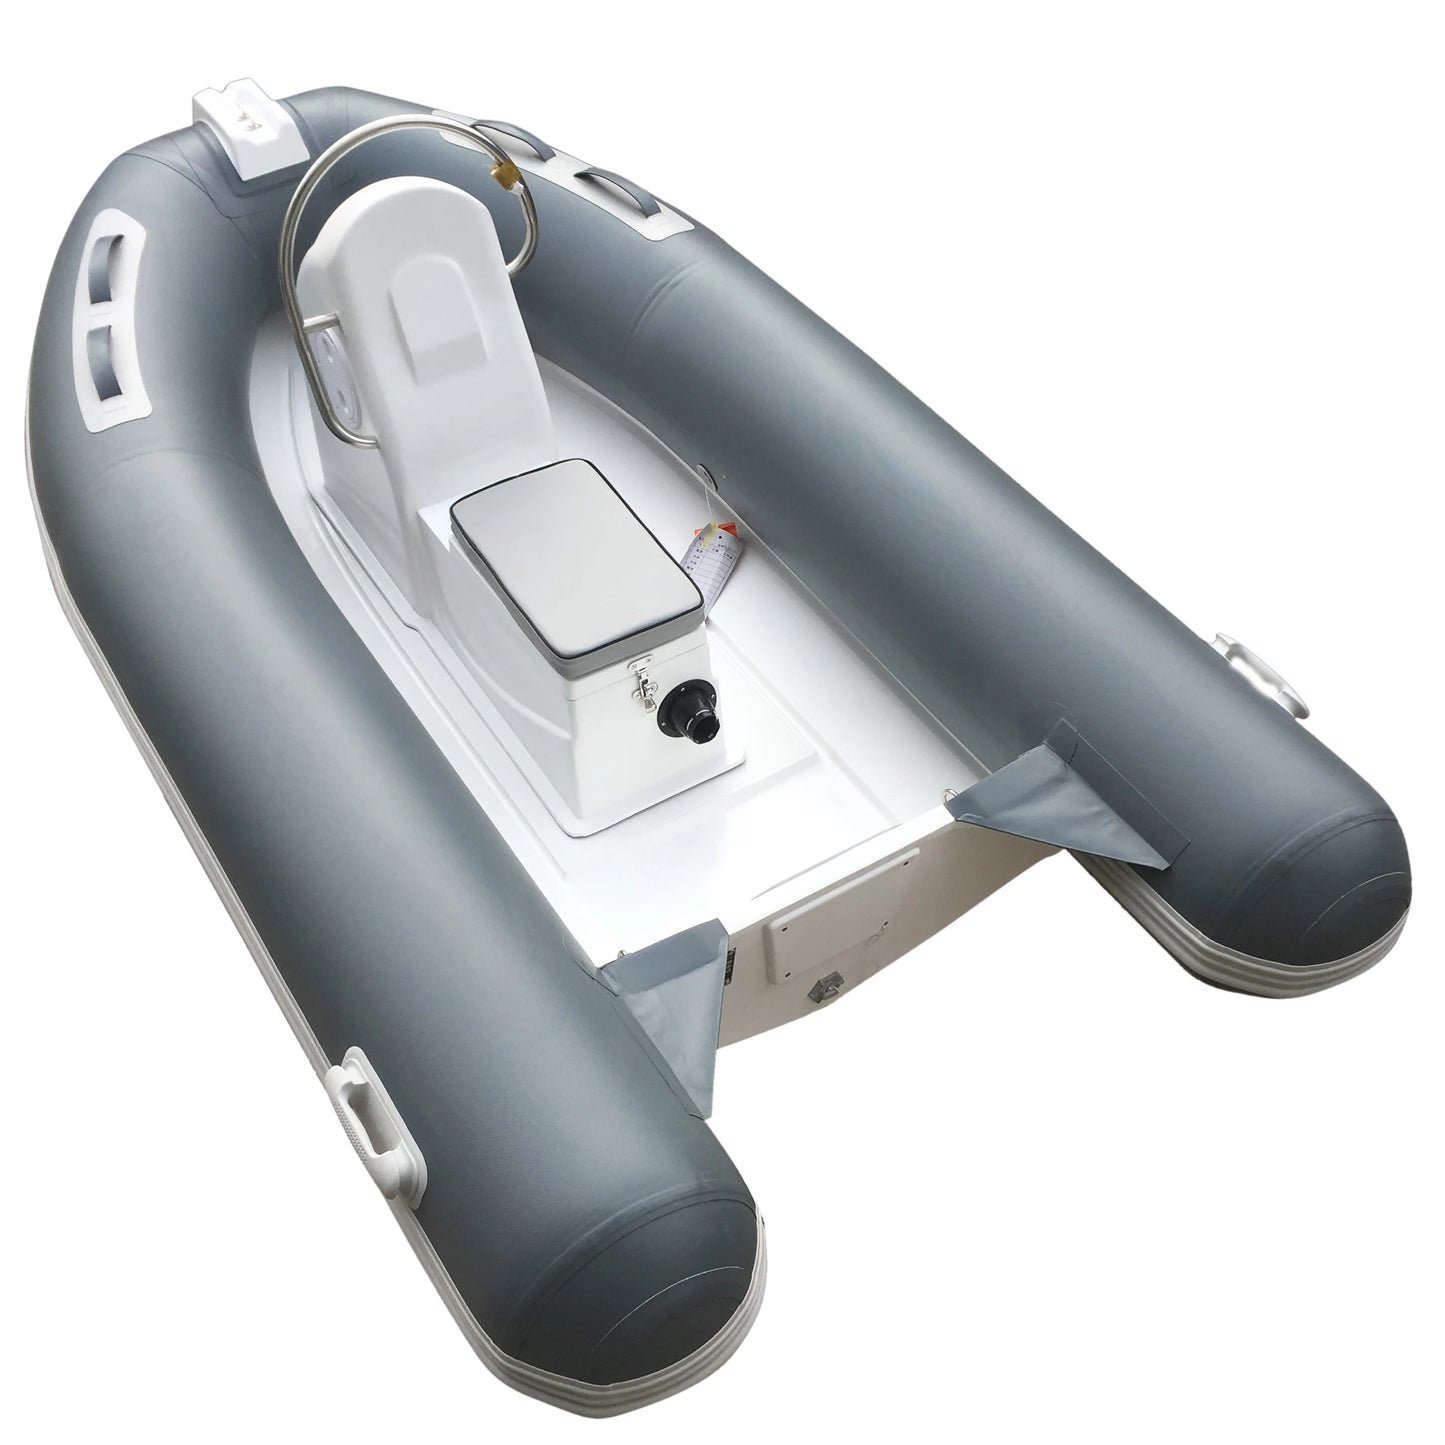 Goboat RIB300B RIB Inflatable Boat CE PVC Hypalon Luxury Multi-color Fiberglass With Fishing Accessories Carpfishing Equipment